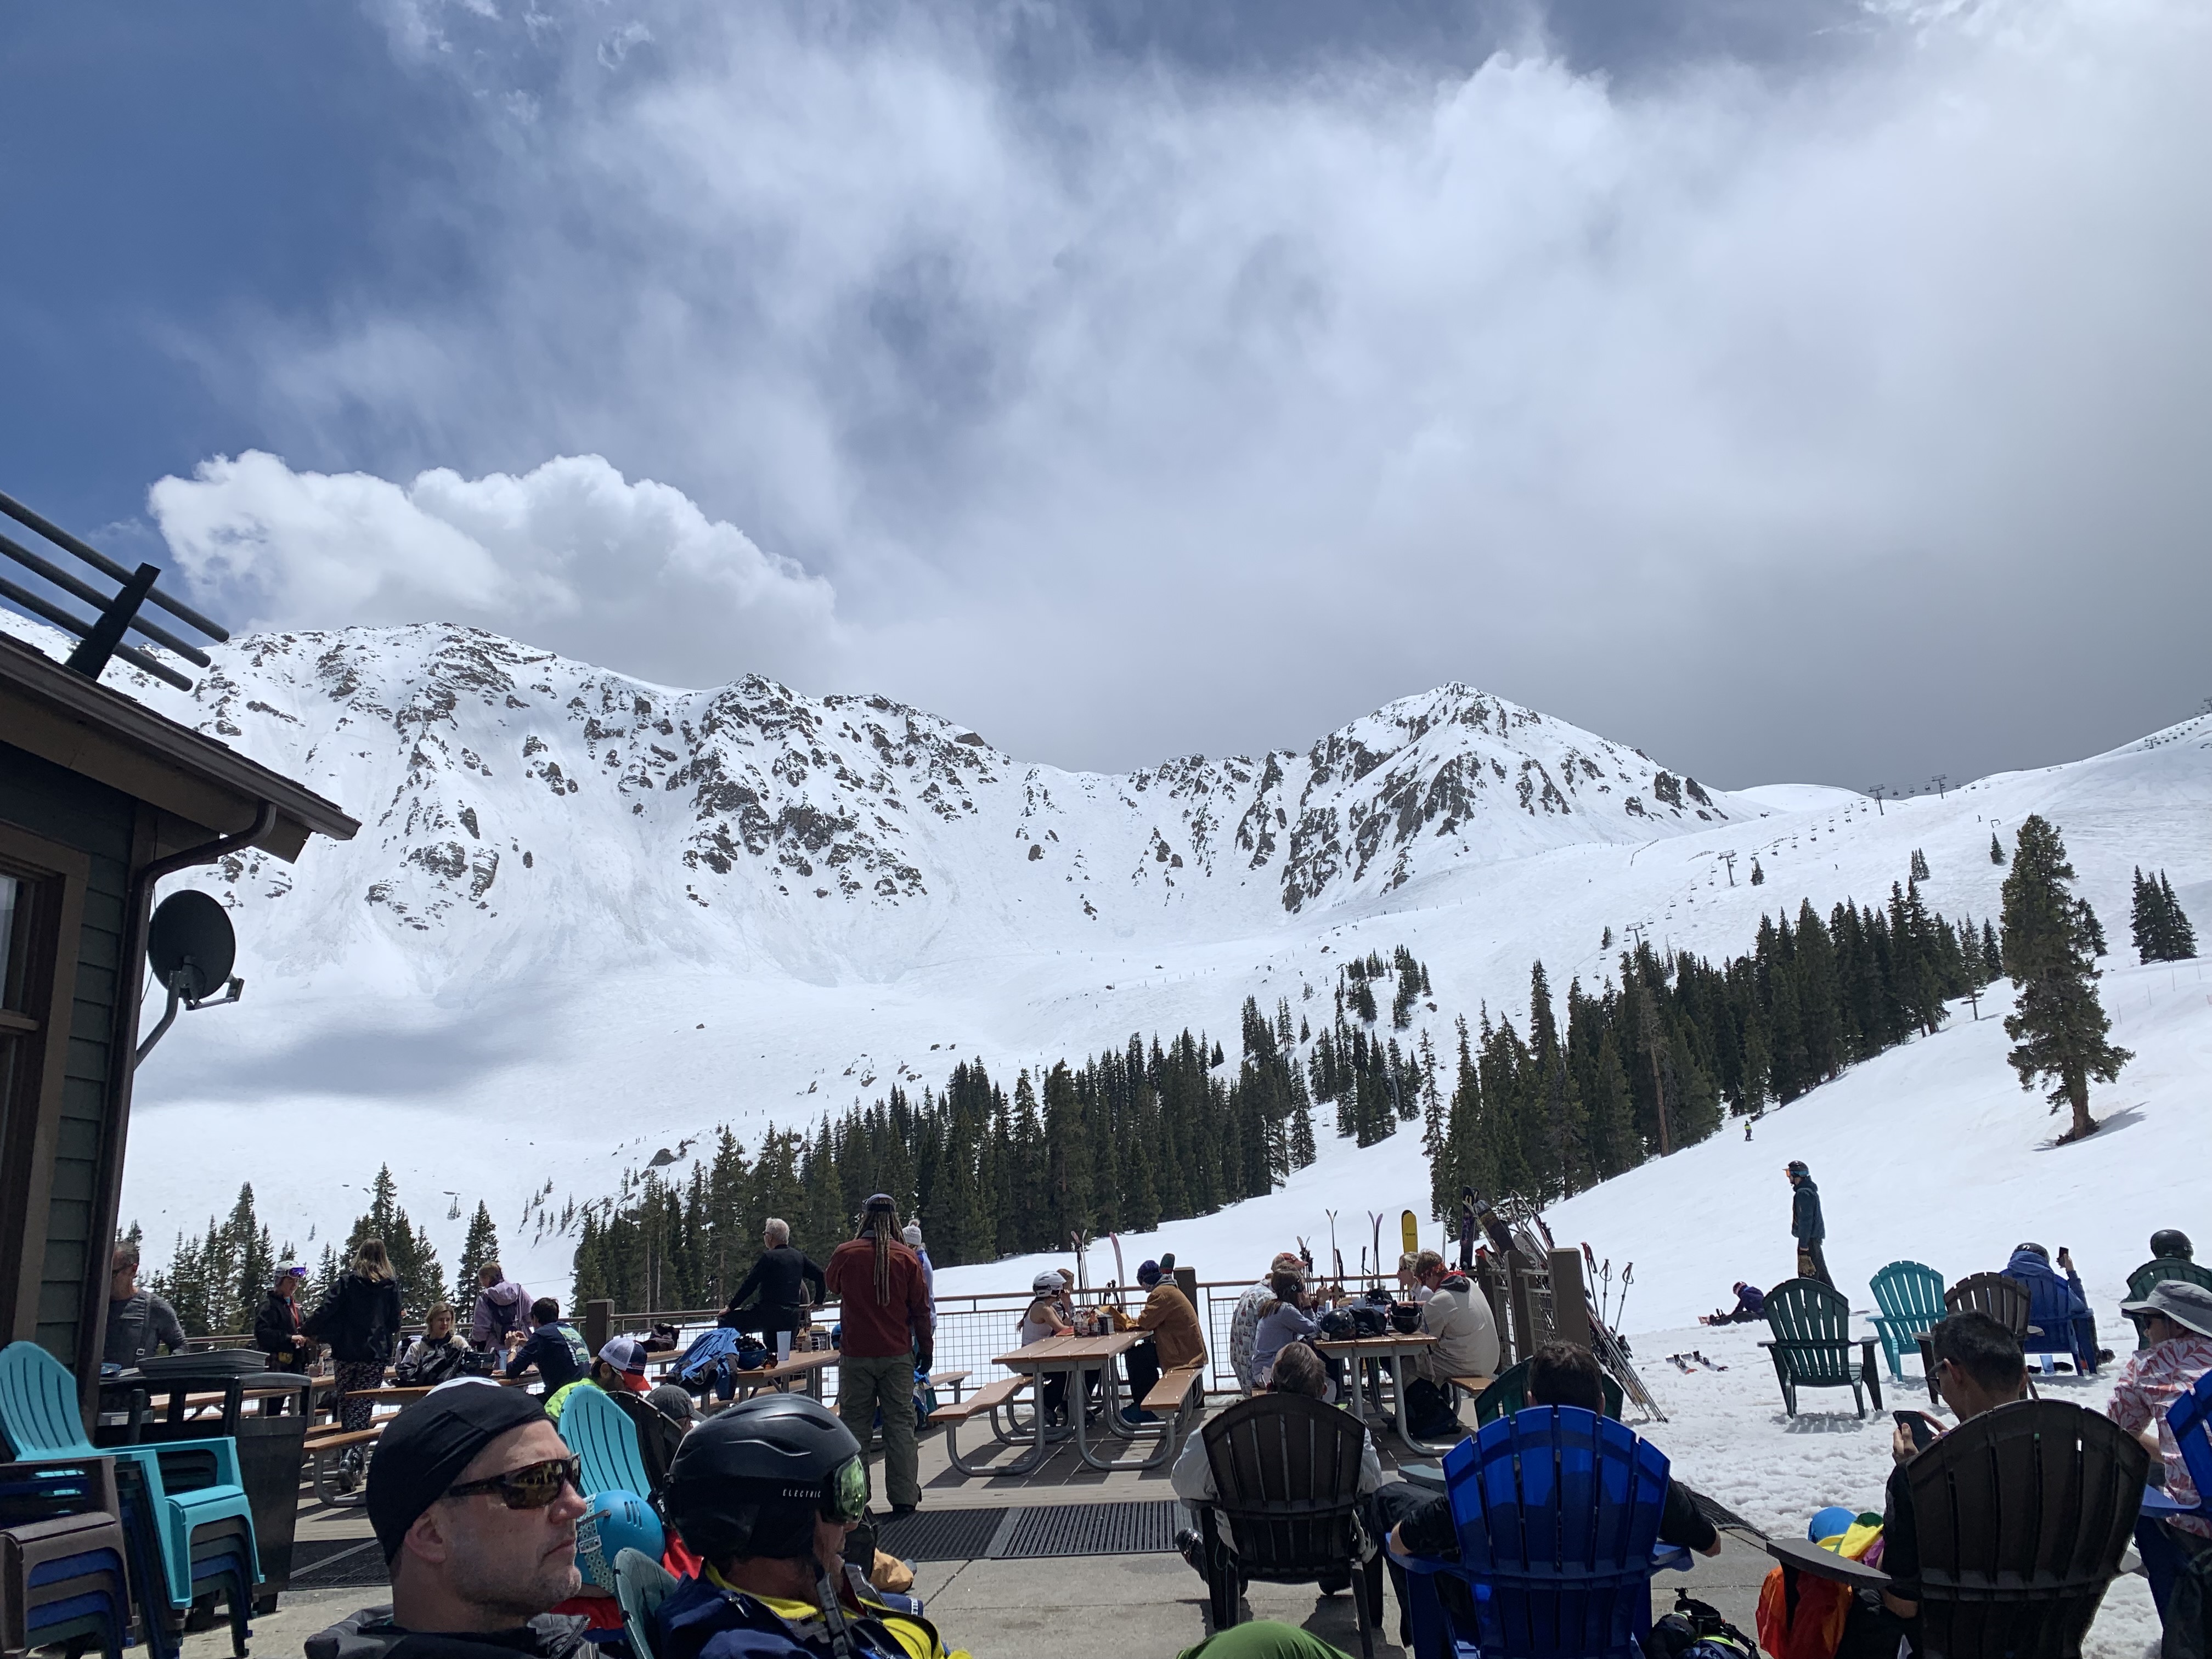 59 Million Skier Visits Recorded This Season- National Ski Areas Association